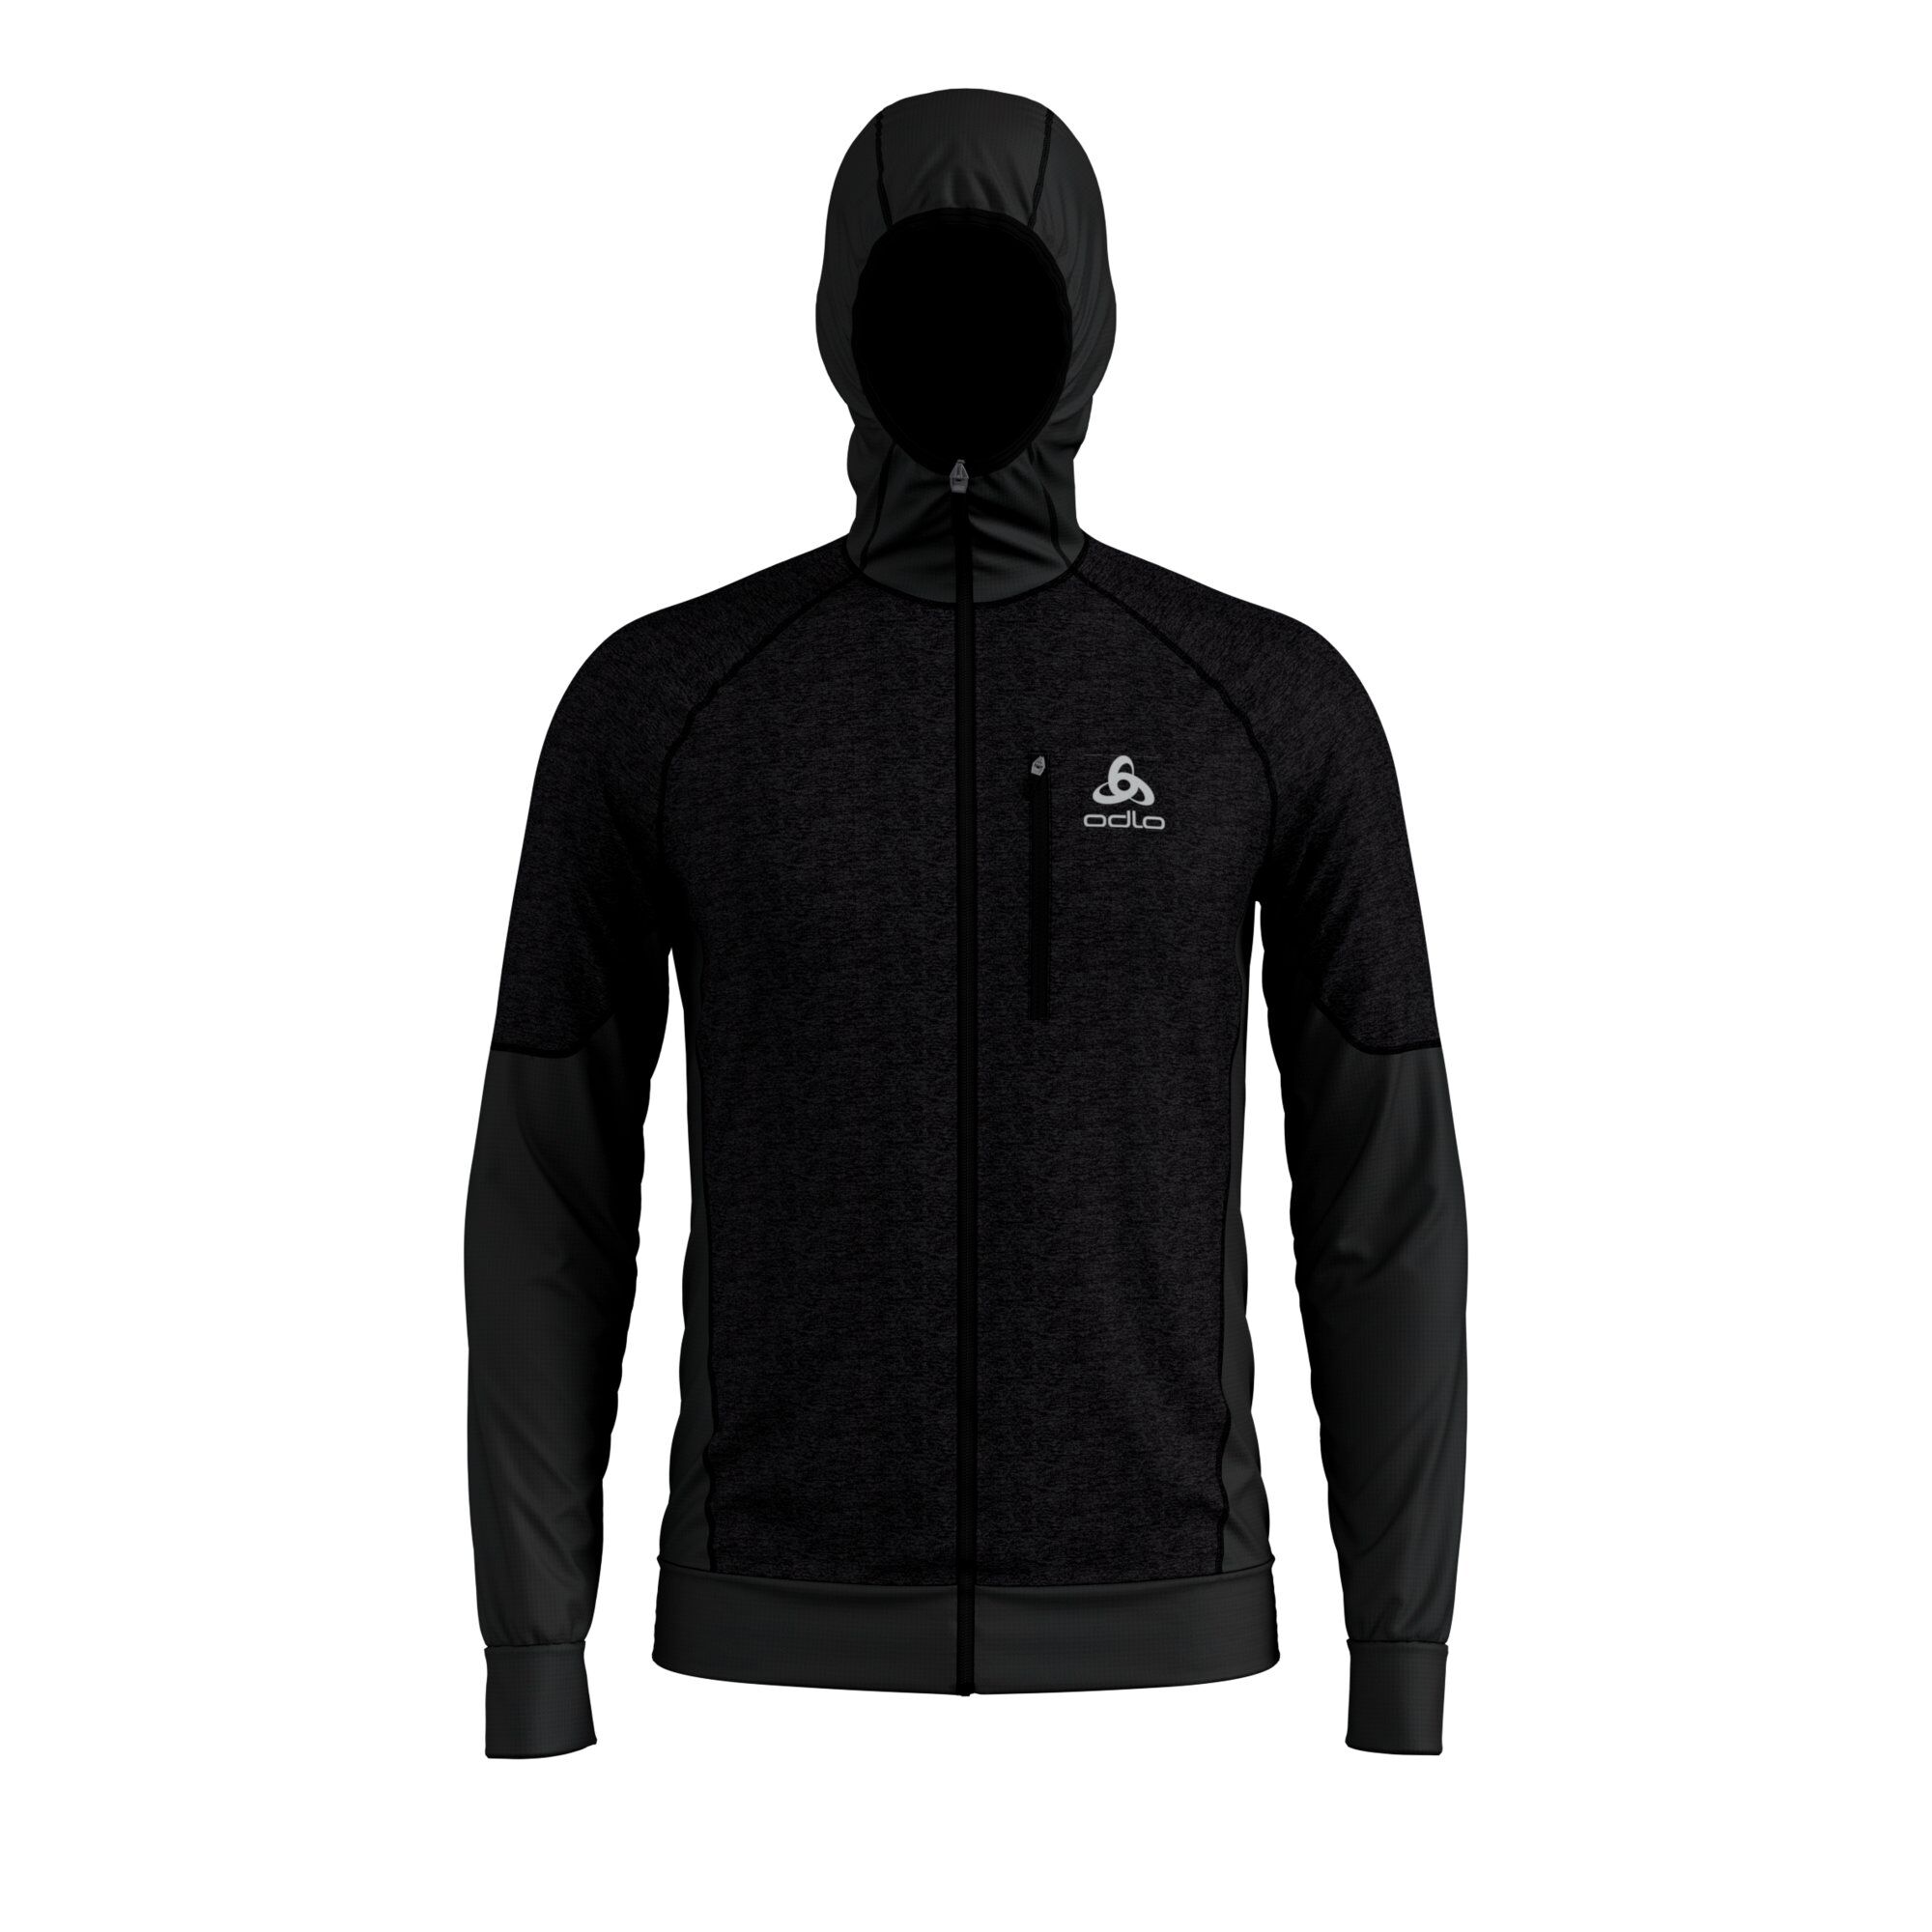 Odlo Millennium Yakwarm Hoody Midlayer Full Zip - Fleece jacket - Men's